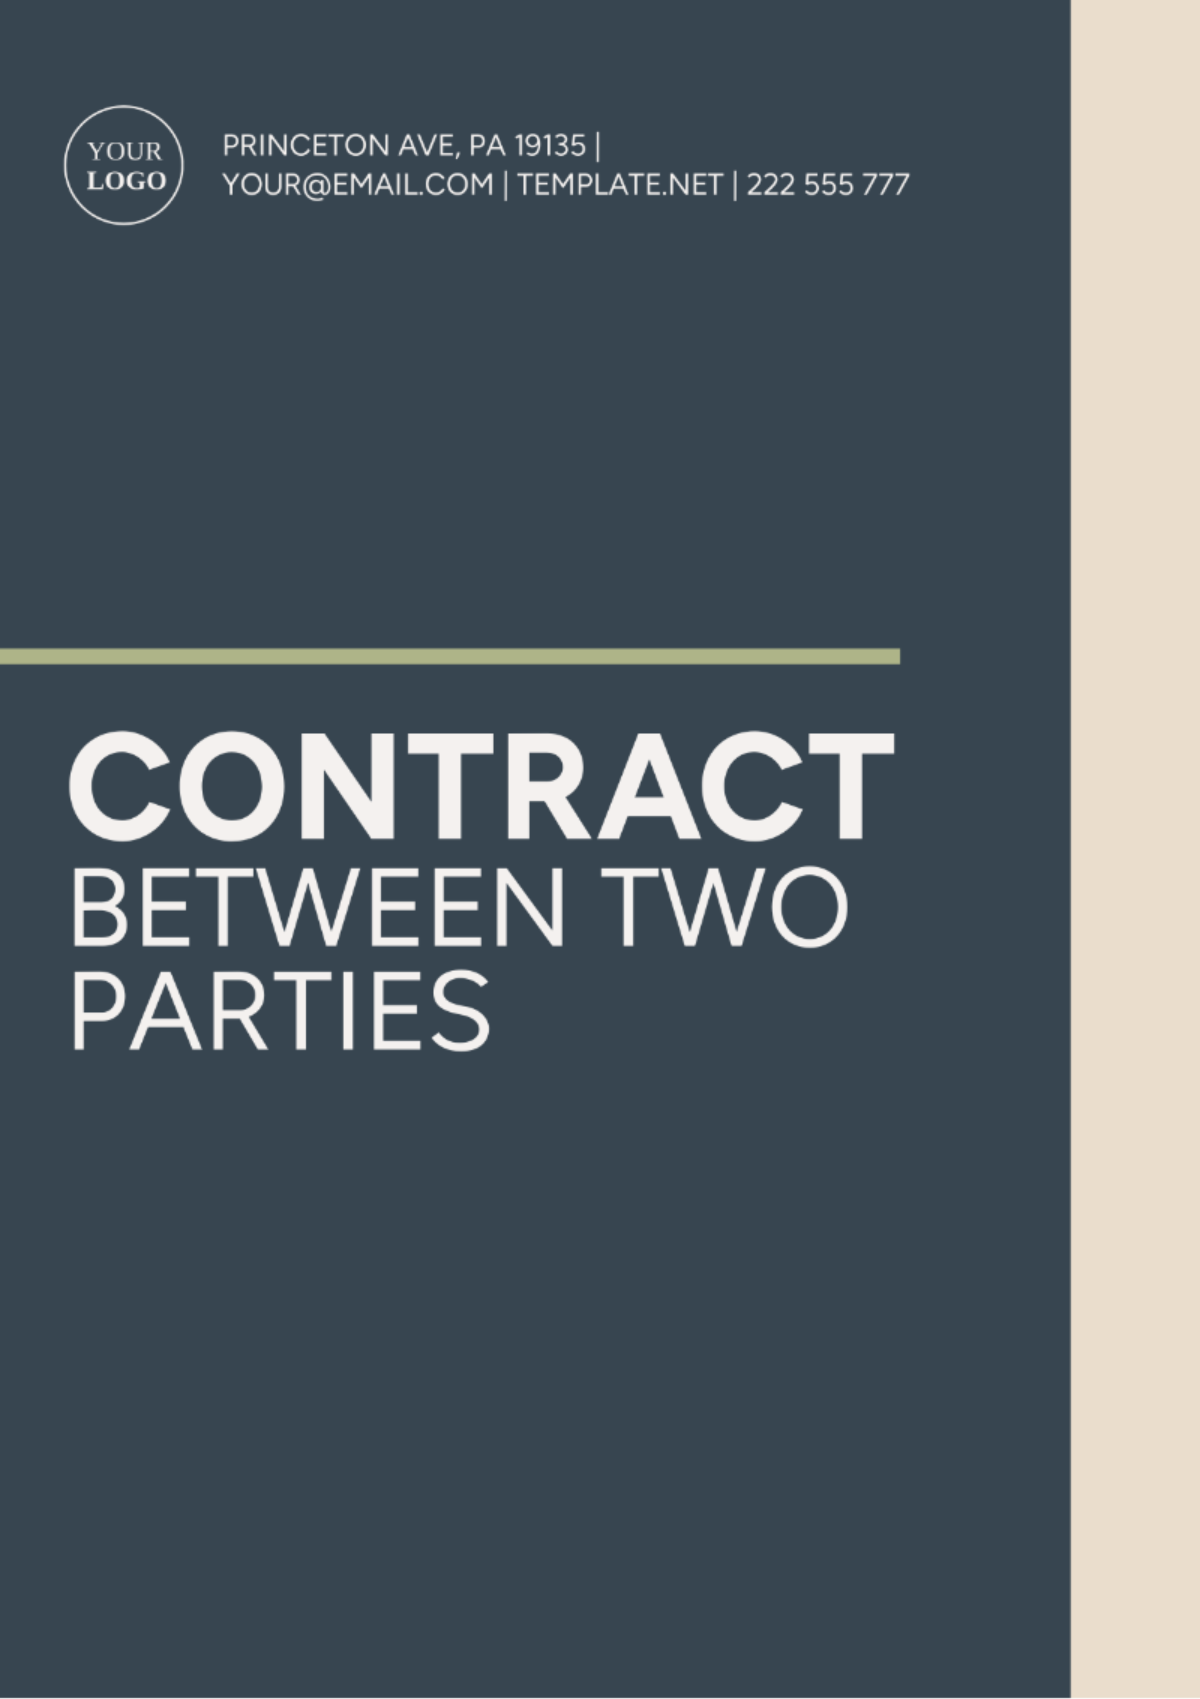 Contract Between Two Parties Template